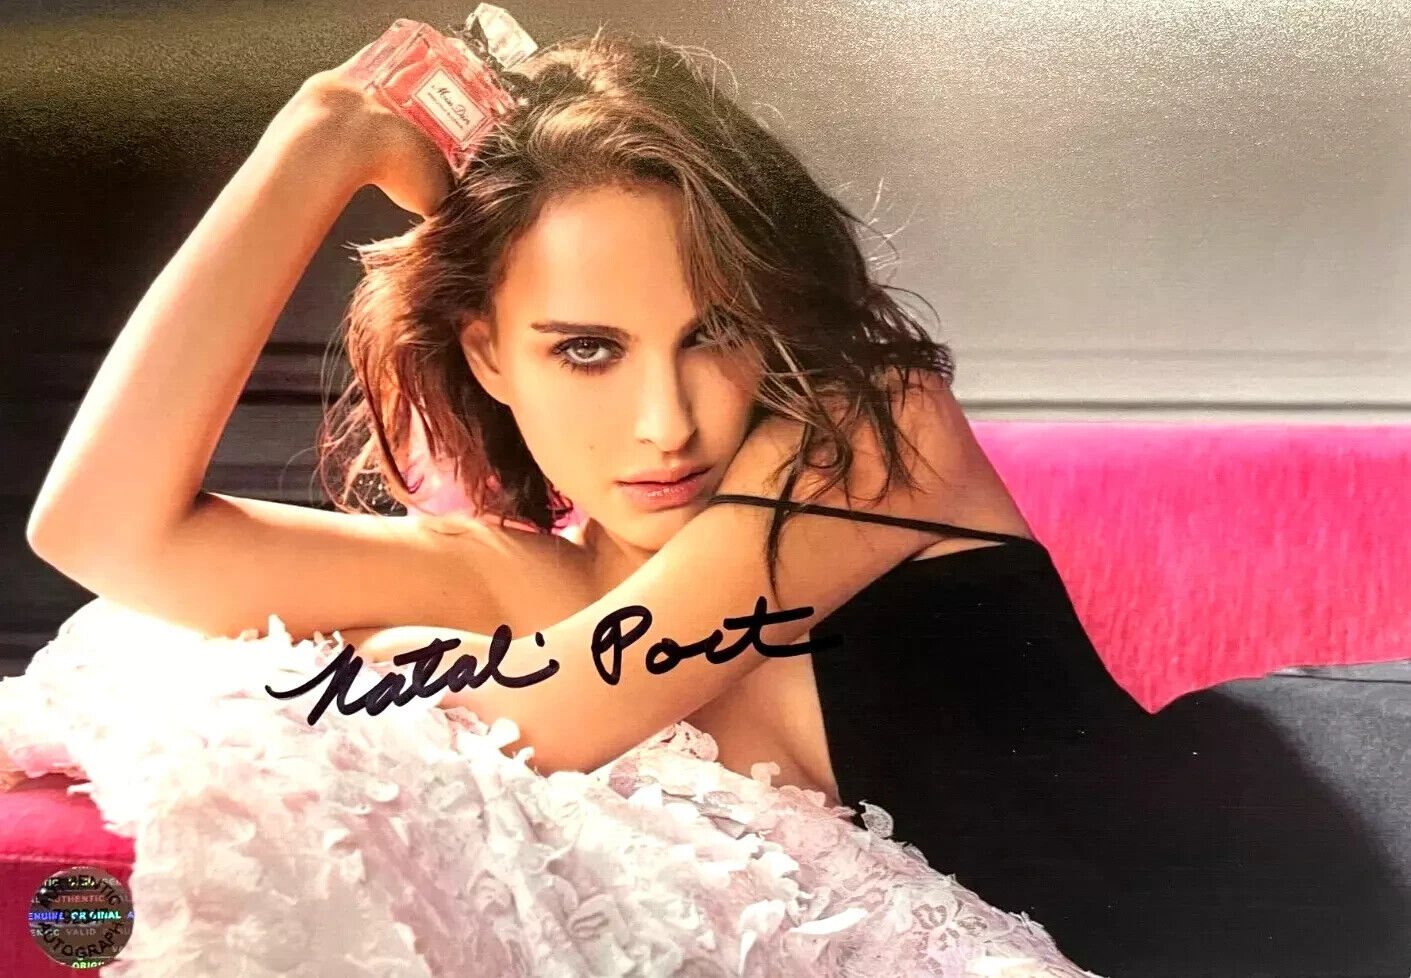 Natalie Portman Hand Signed 7x5 inch Color Photo Autograph Original w/COA